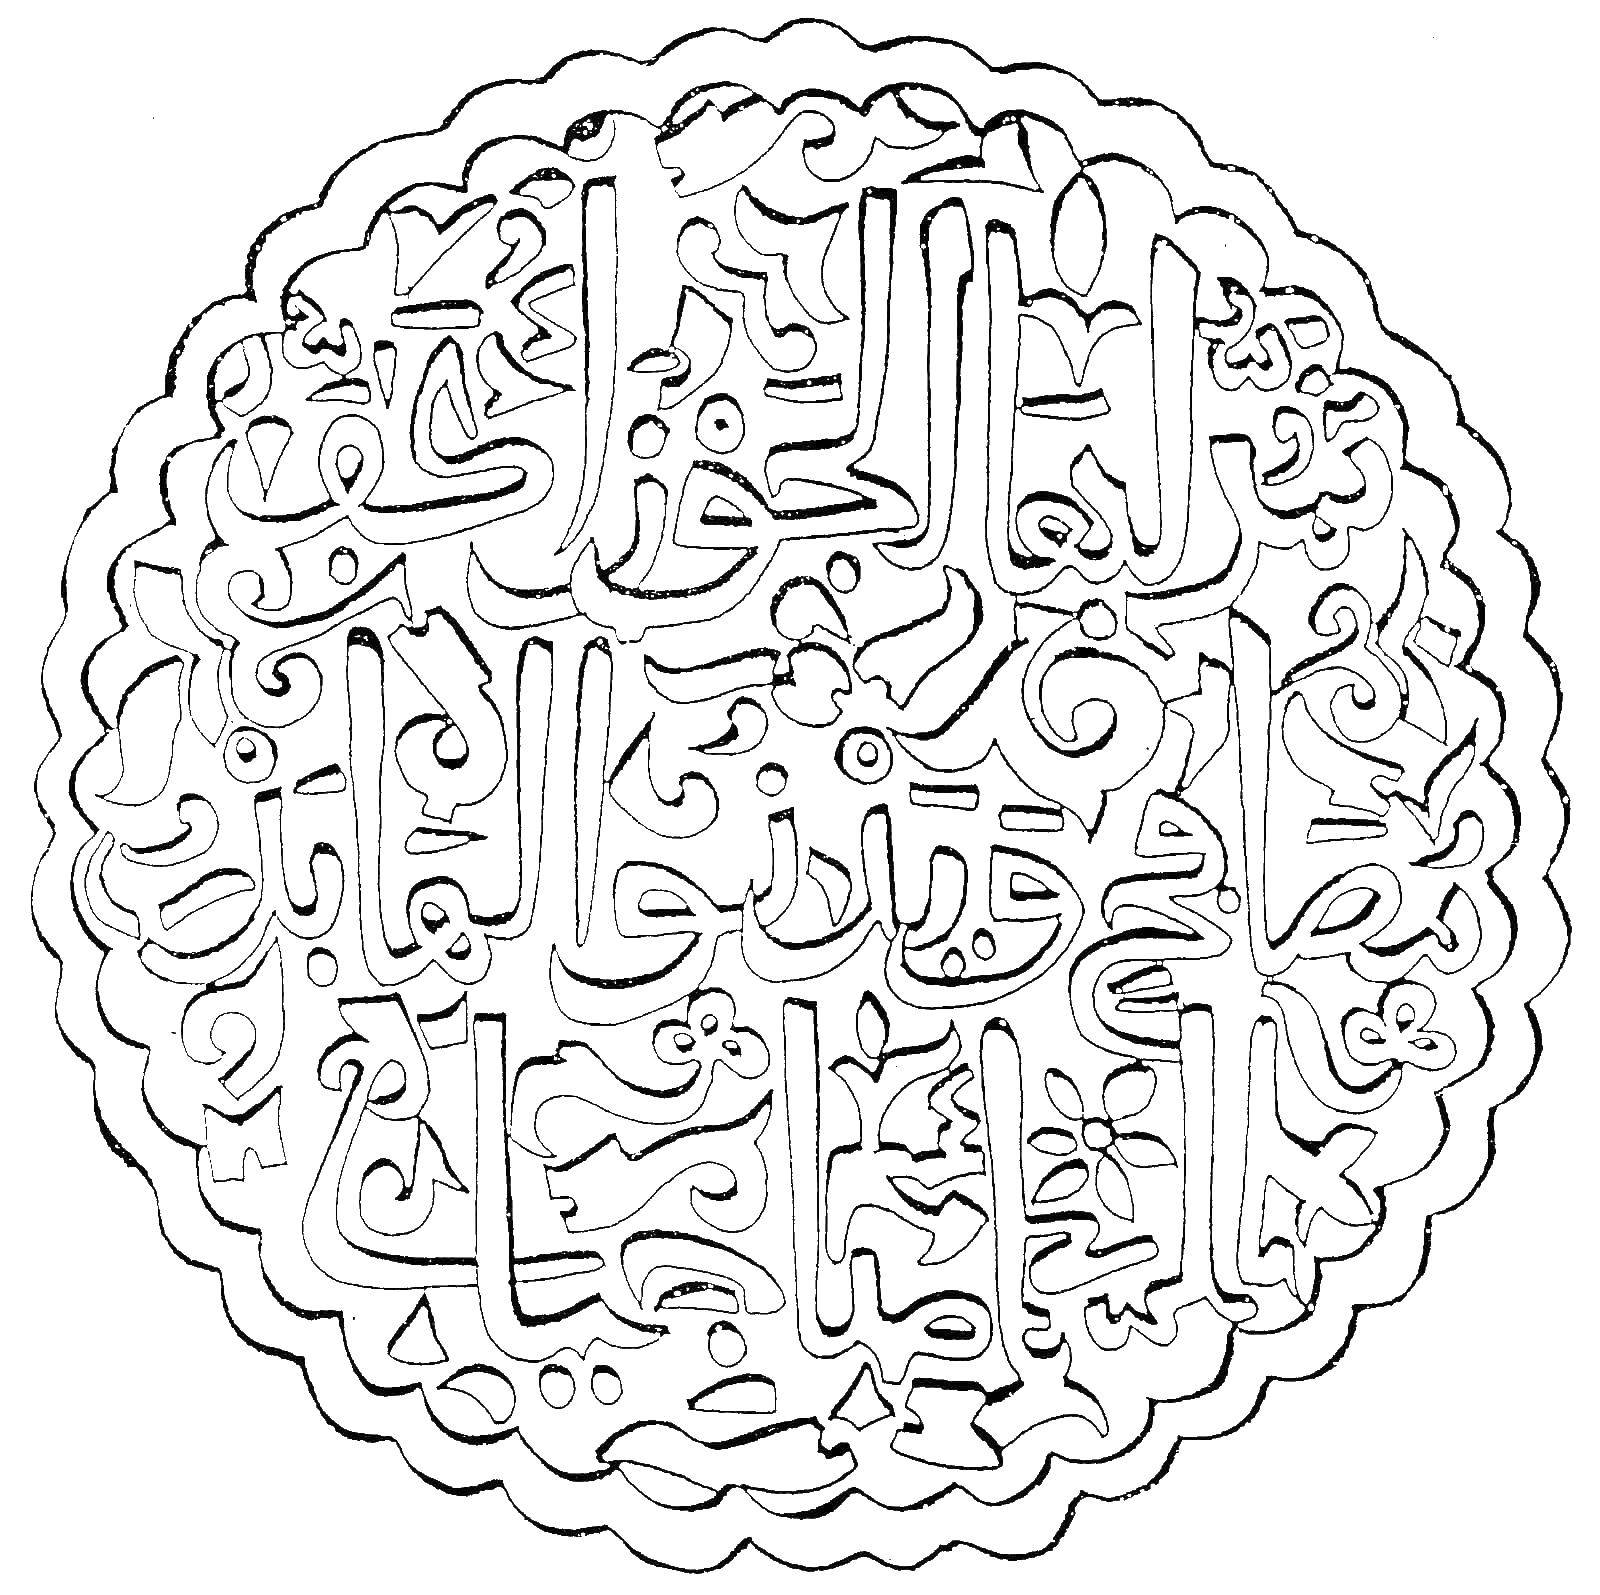 Coloring Надписи. Category Коран. Tags:  надписи, коран.